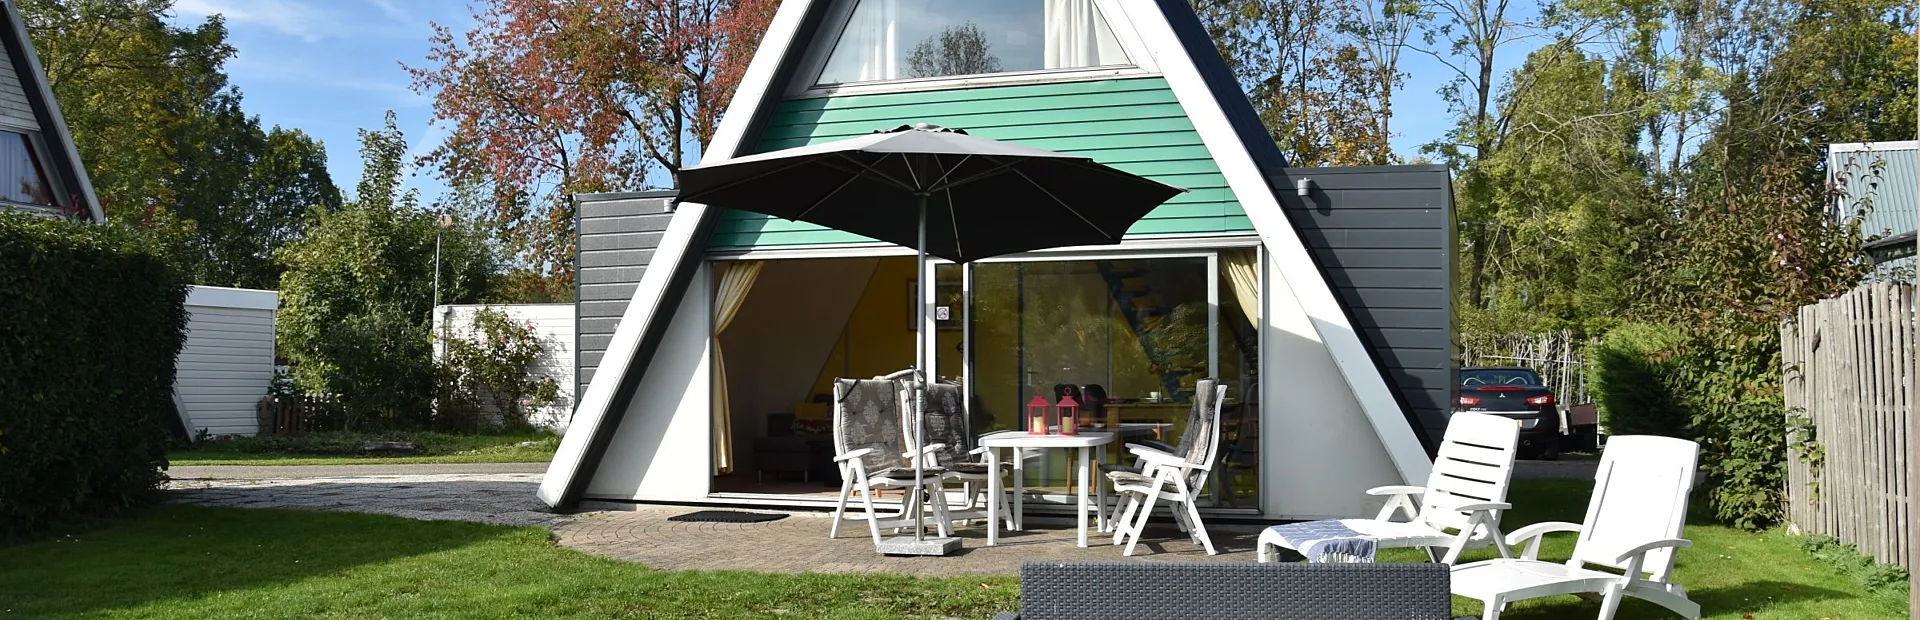 Naturisten huisje Nederland bungalow 36 1